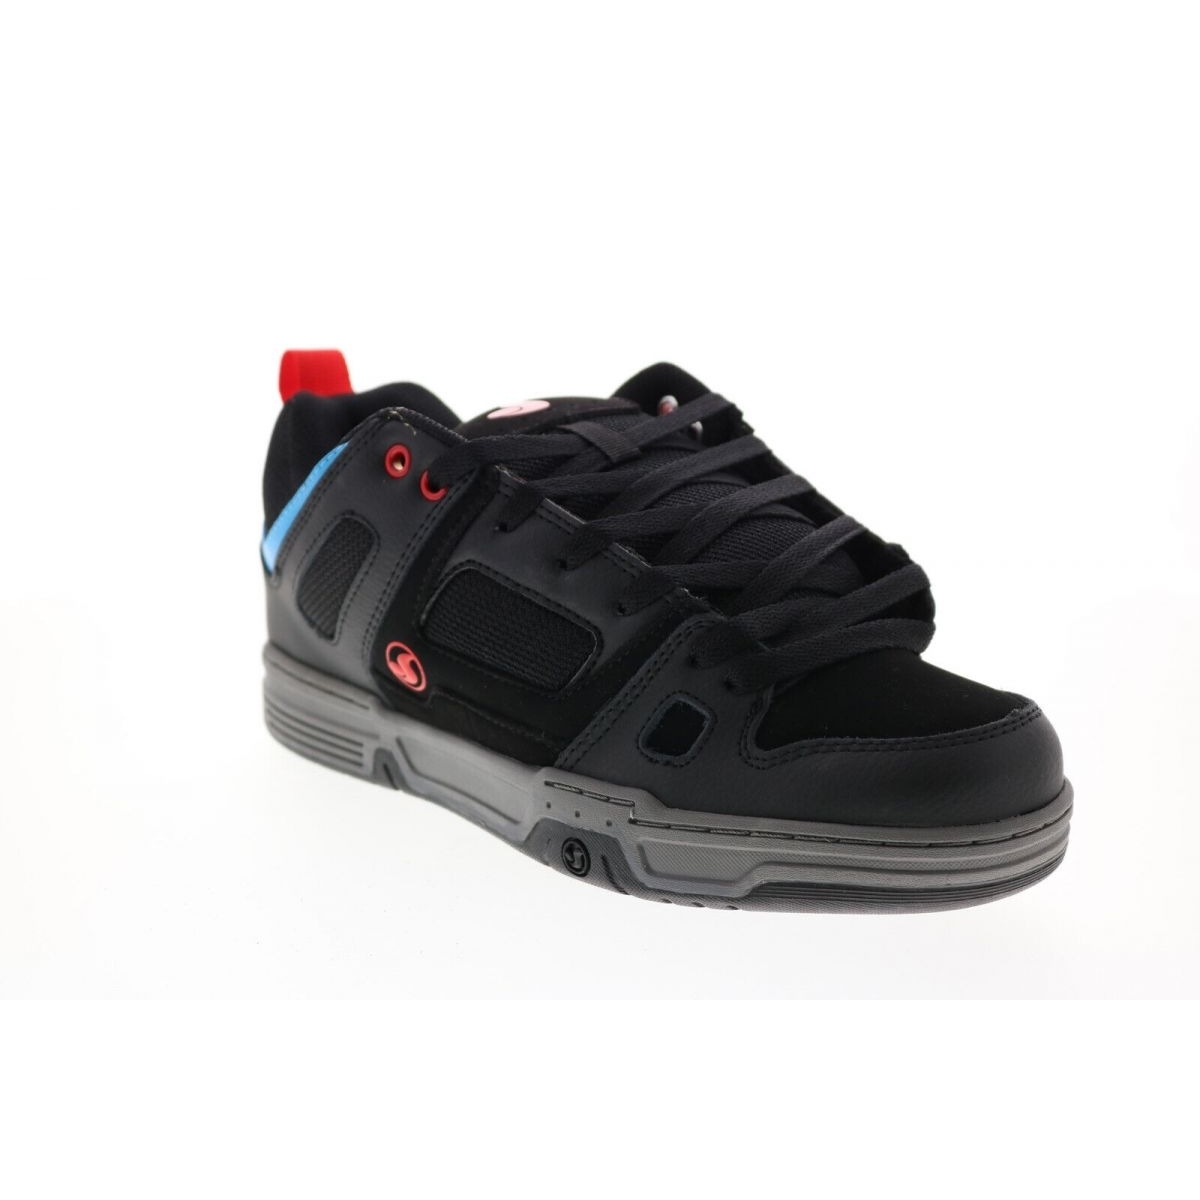 DVS Men's Gambol Skate Shoe 0 BLACK FIERY RED BLUE NUBUCK - BLACK FIERY RED BLUE NUBUCK, 11